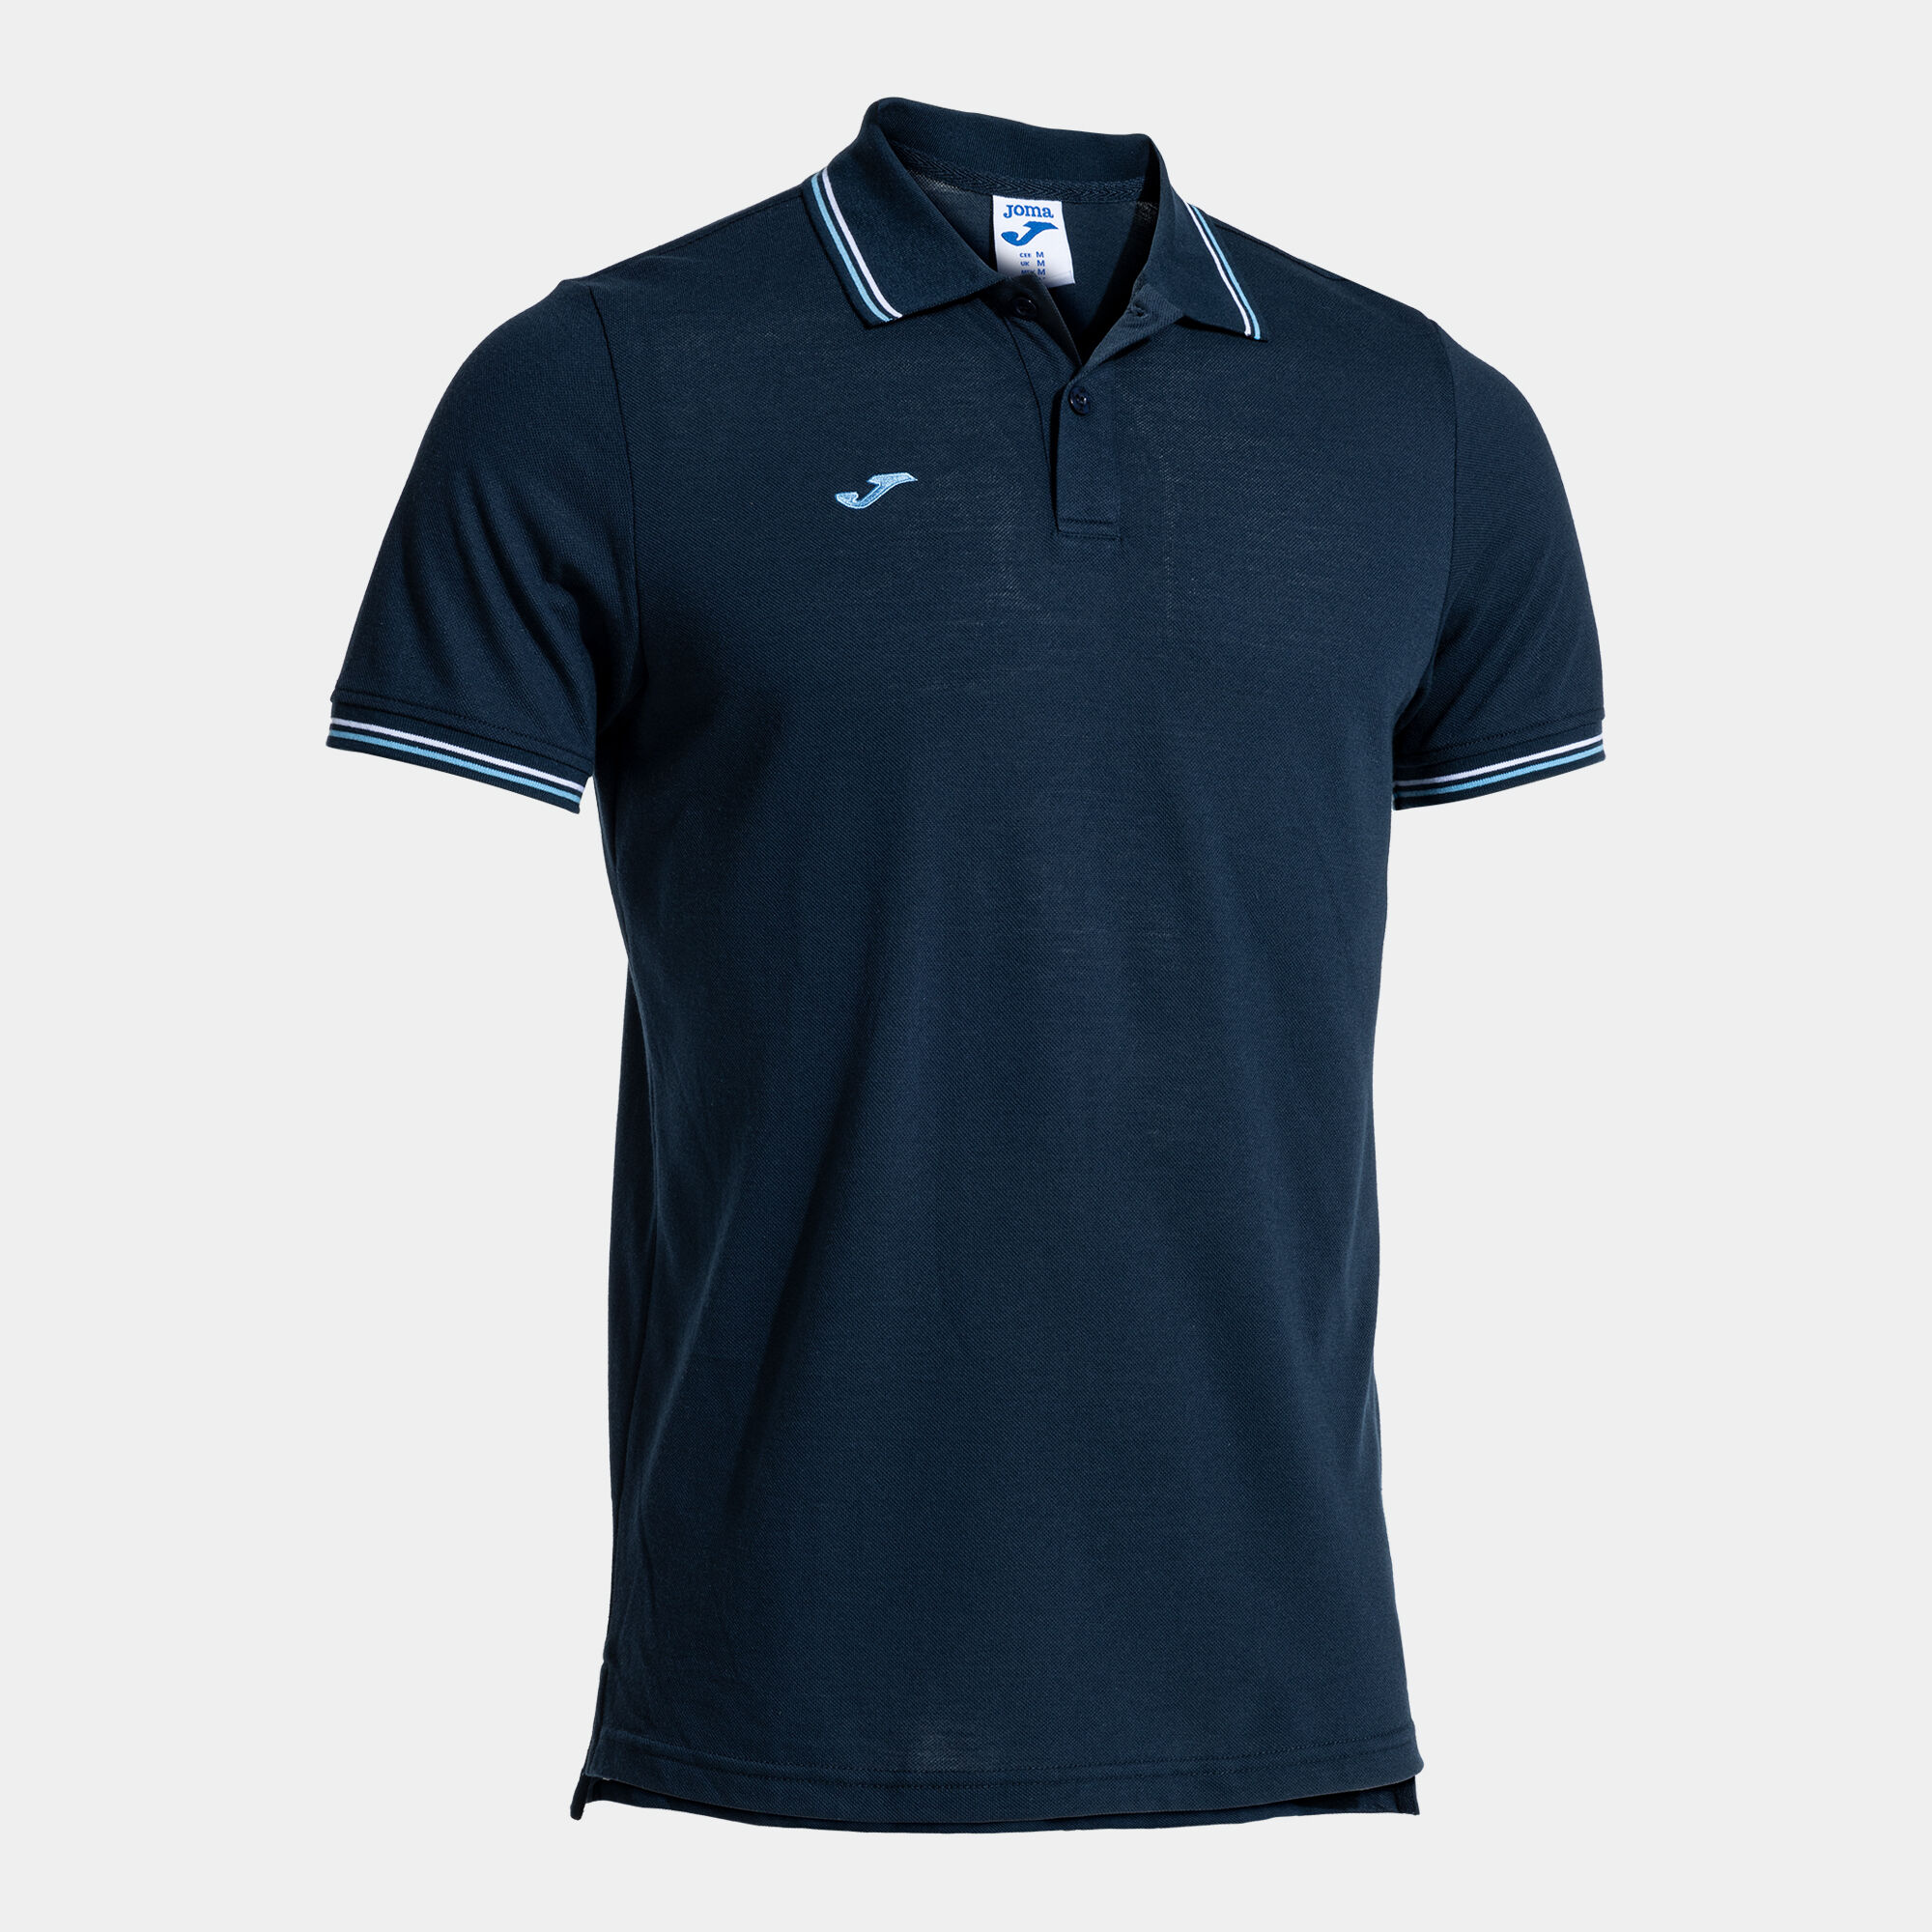 Polo shirt short-sleeve man Confort Classic navy blue sky blue